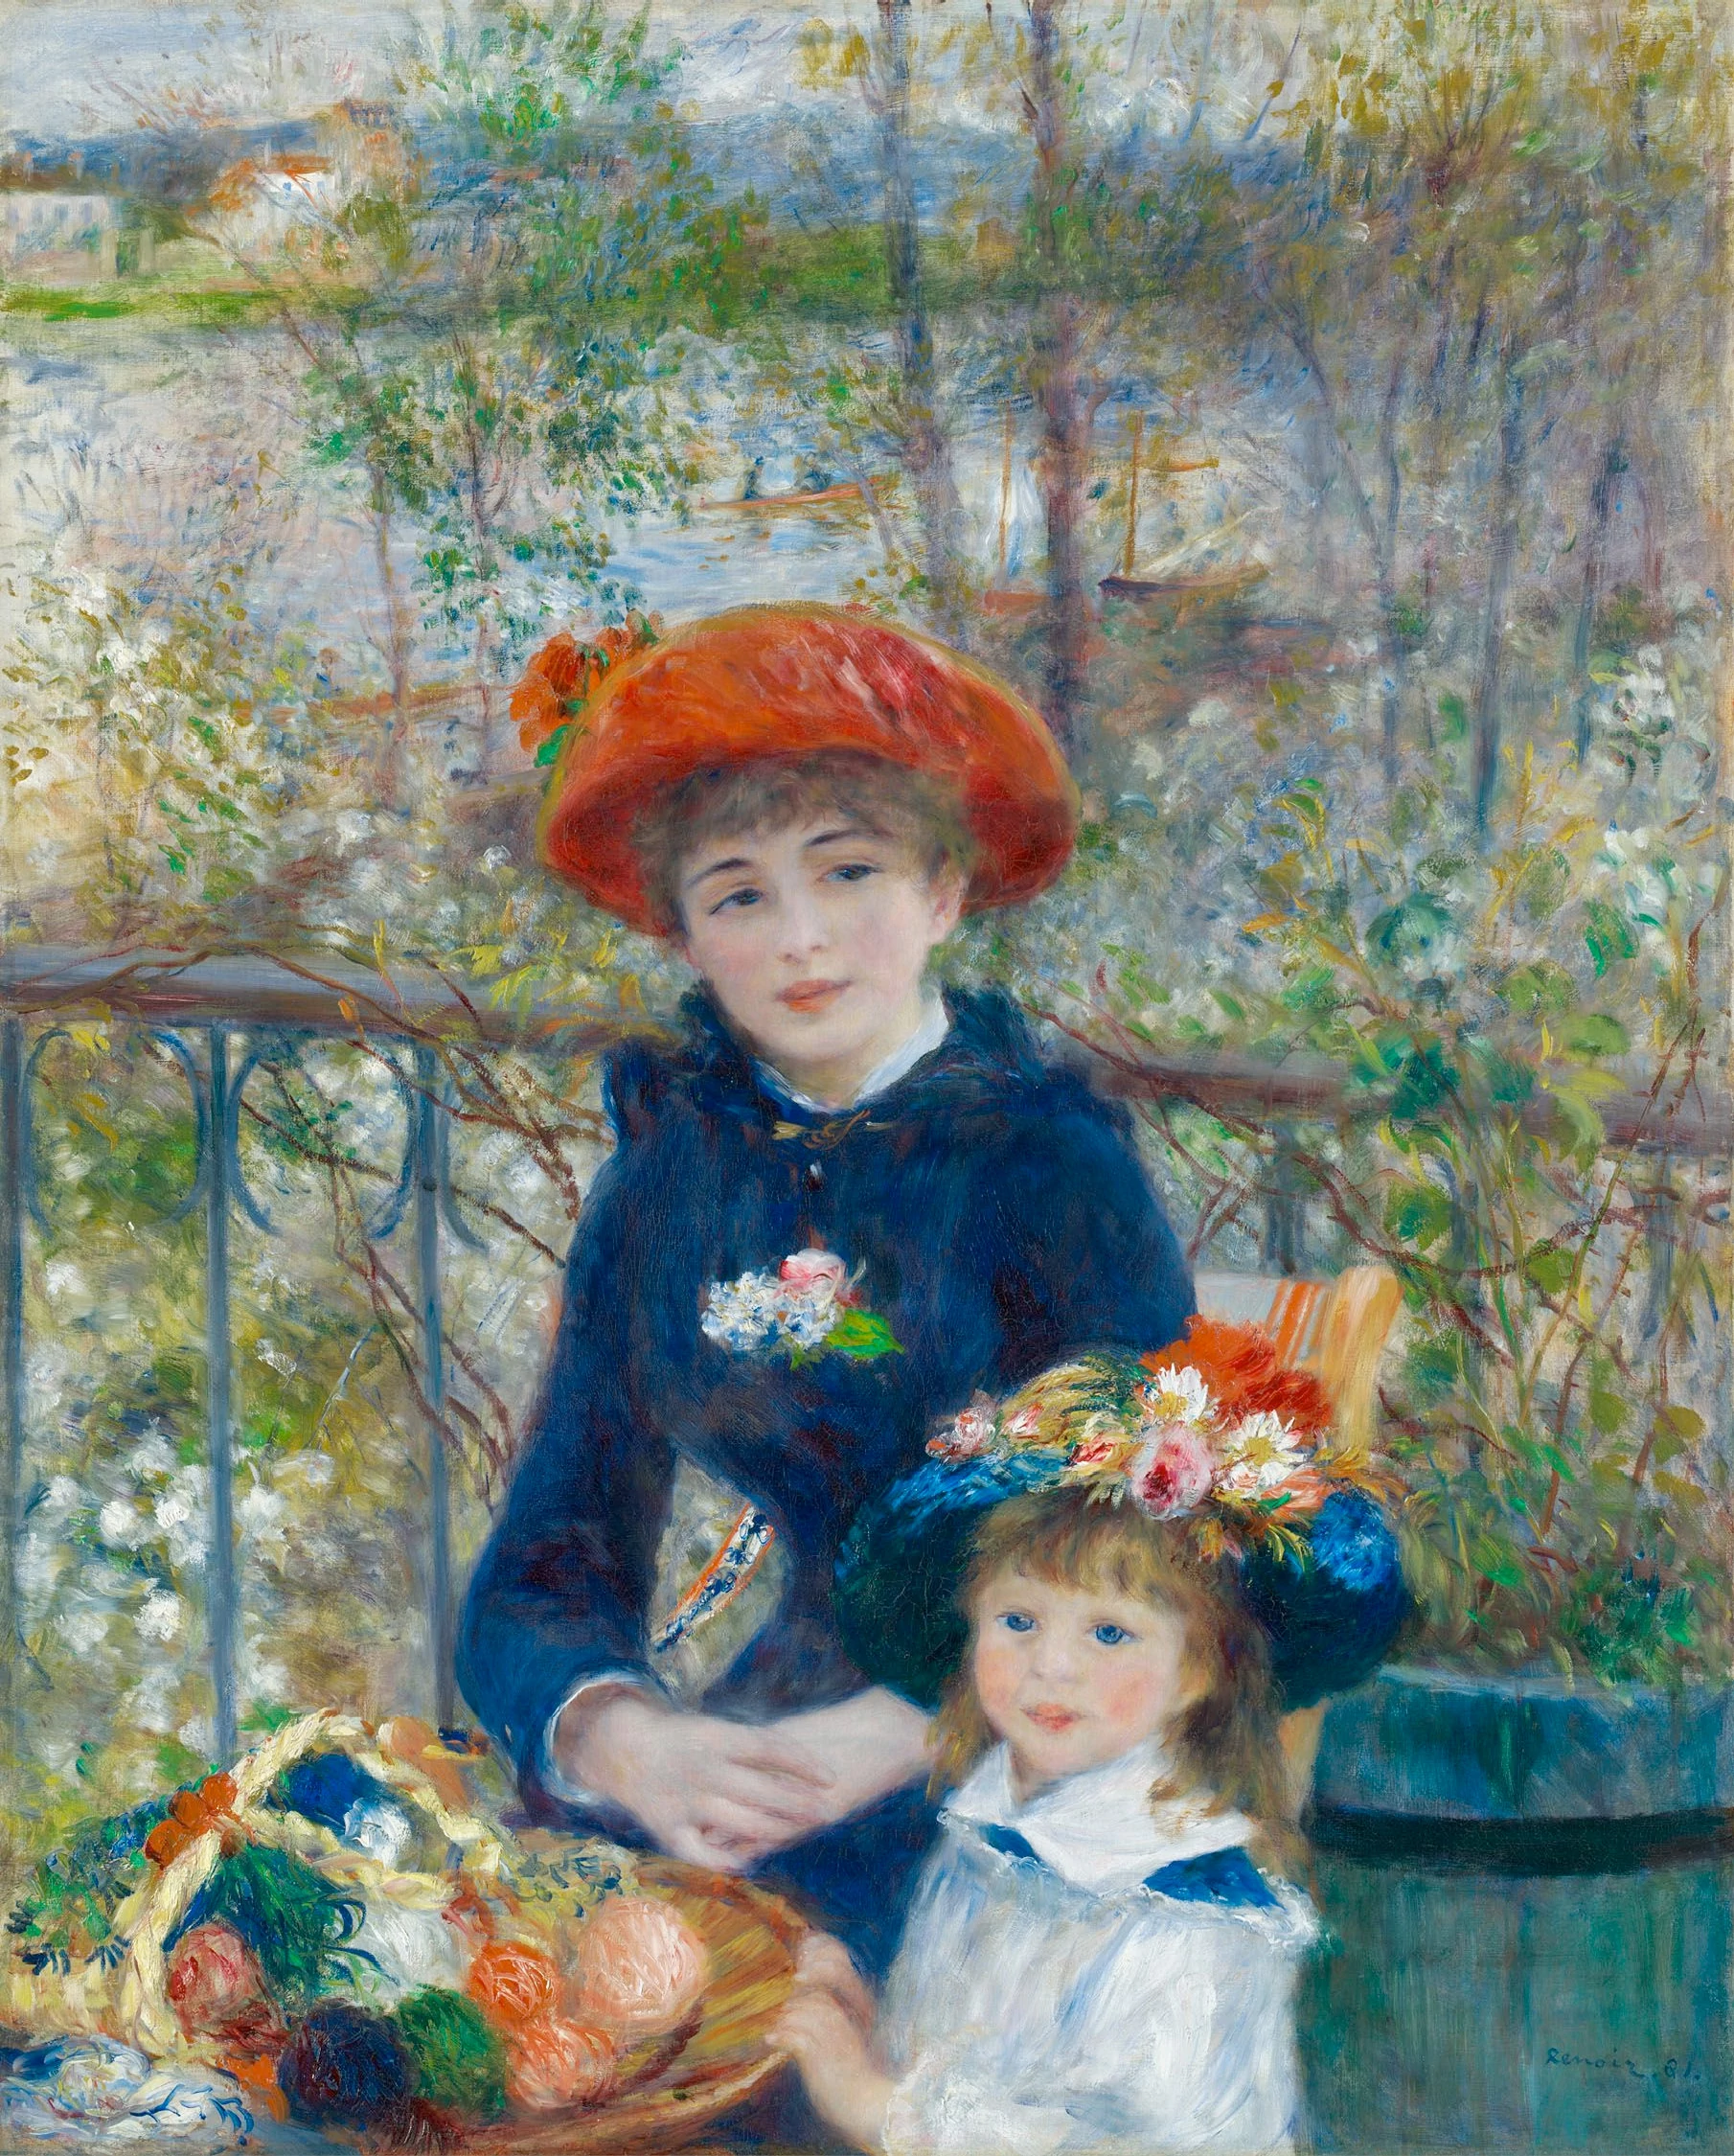 Pierre-Auguste Renoir, The Artists